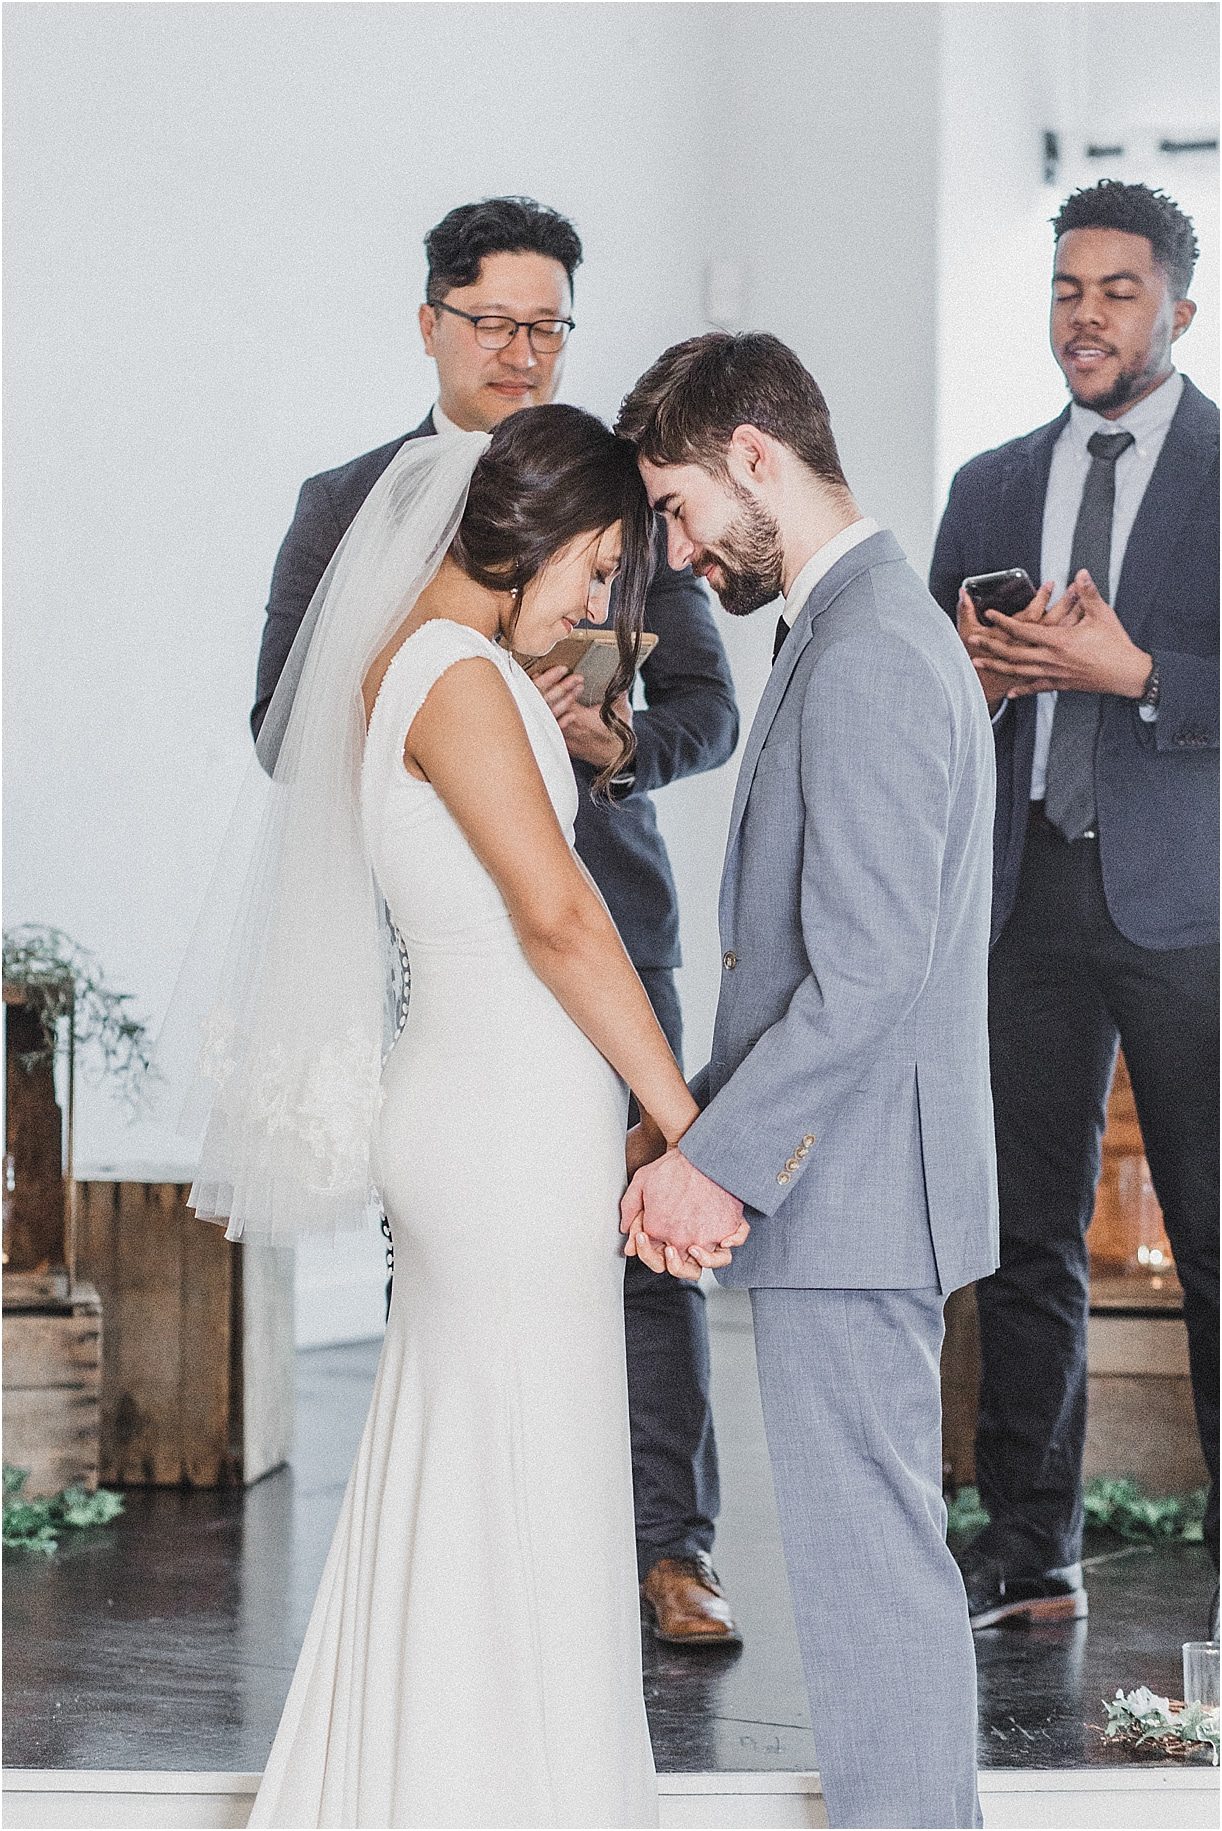 Intimate White Wedding During Coronavirus | Hill City Bride Virginia Weddings Ceremony